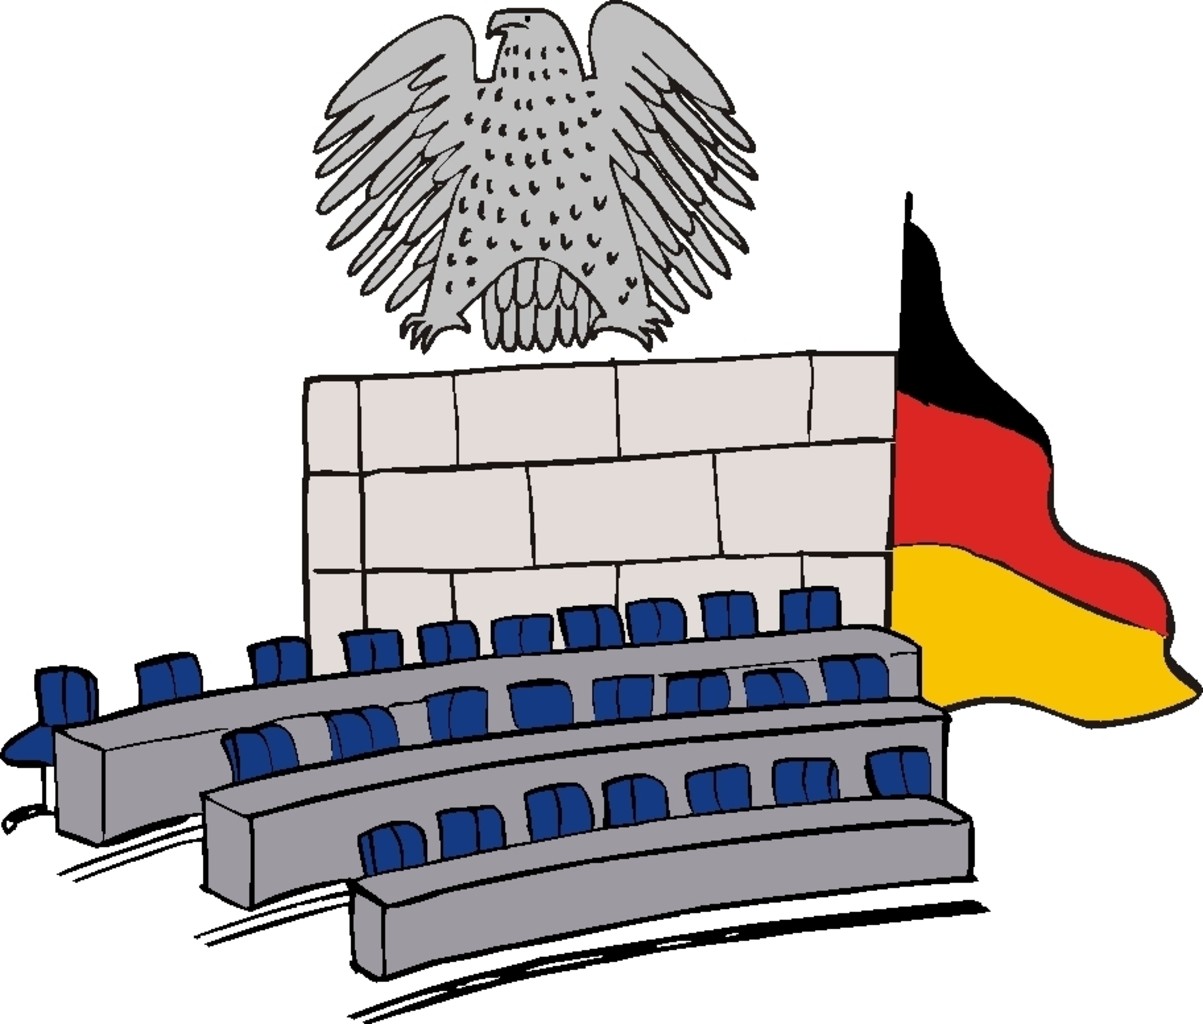 Bundestag data